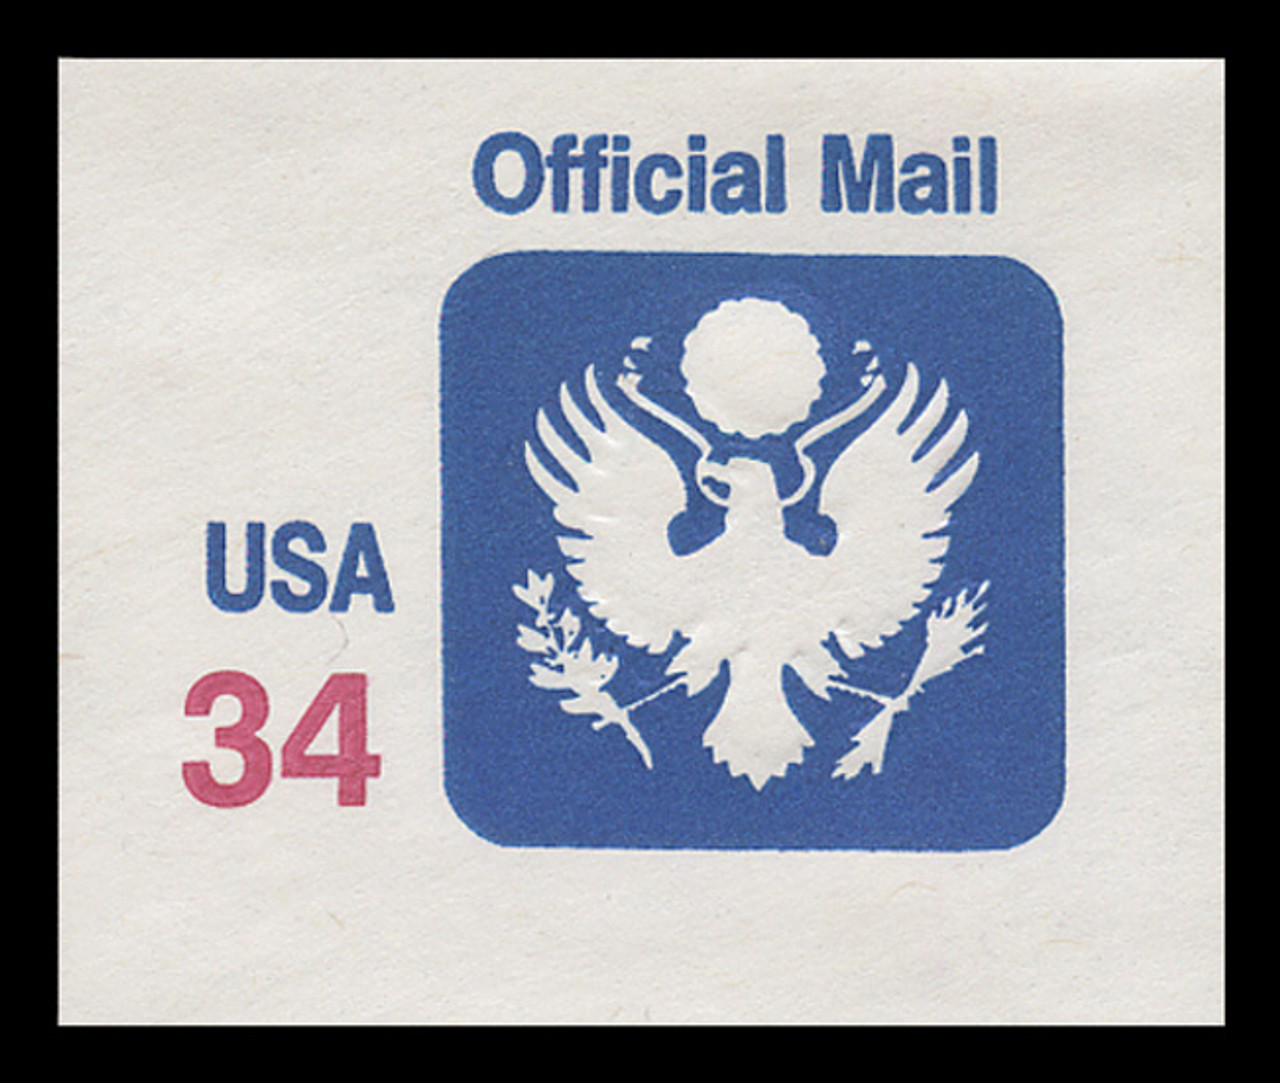 USA Scott # UO  90 2001 34c Official Mail - Mint Cut Square